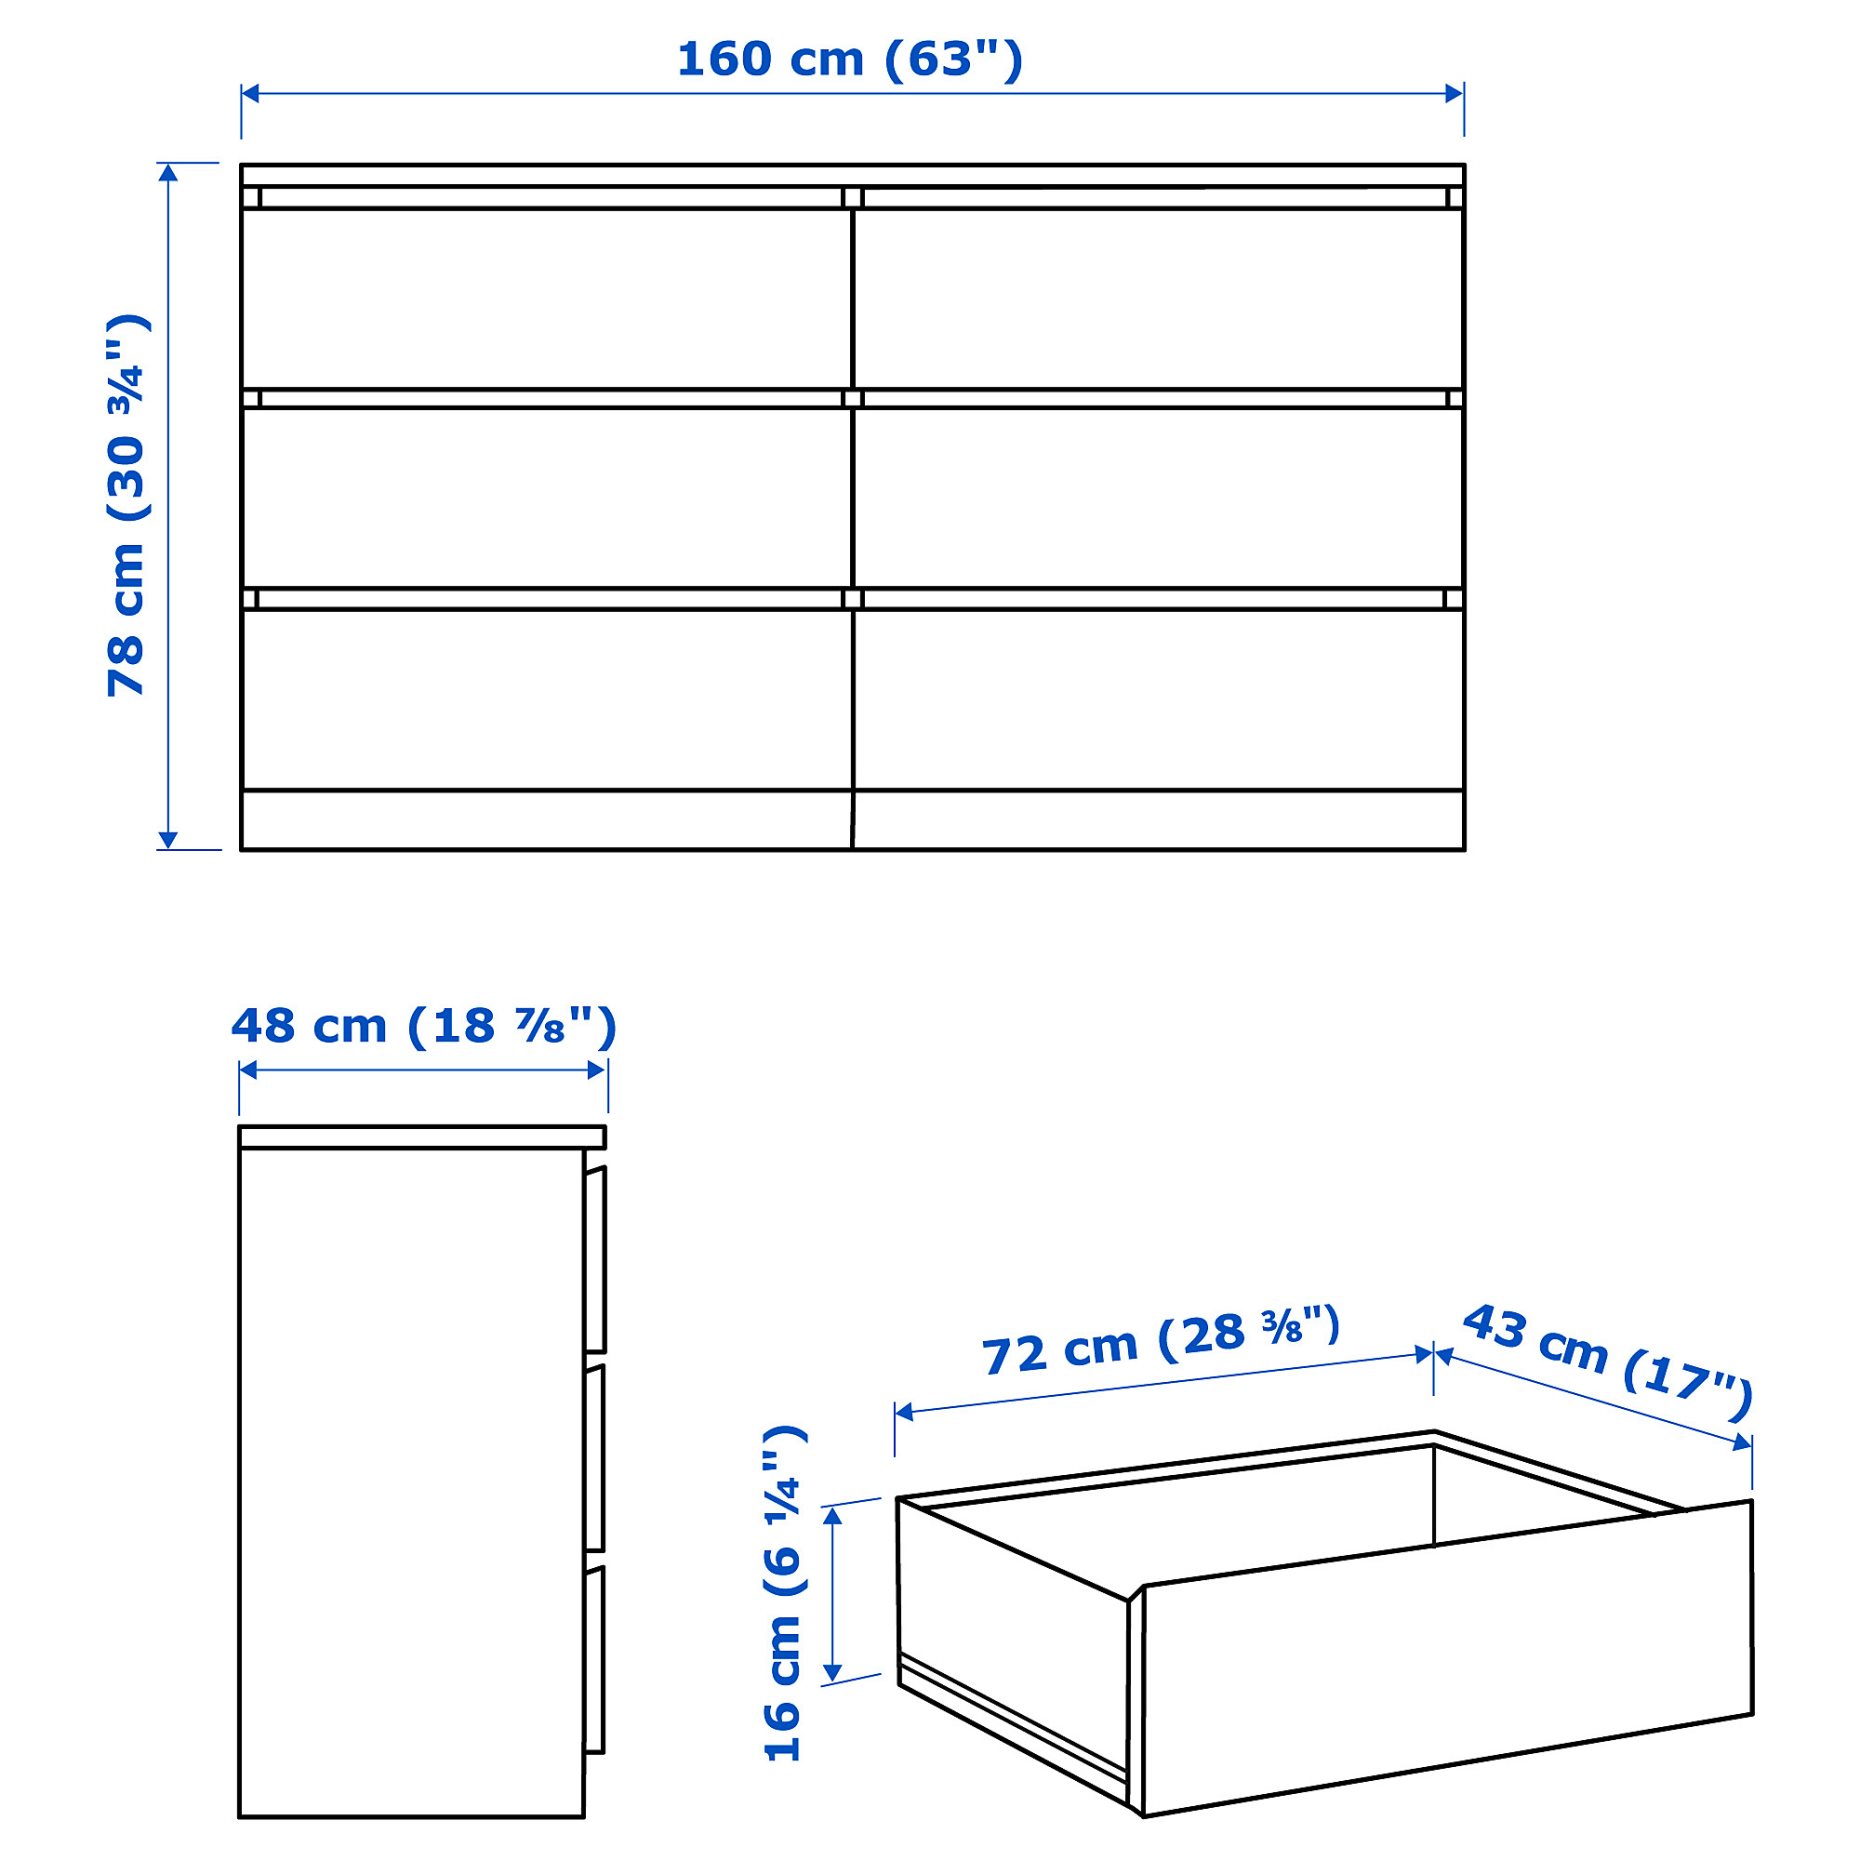 MALM, bedroom furniture/set of 4, 160x200 cm, 394.834.03